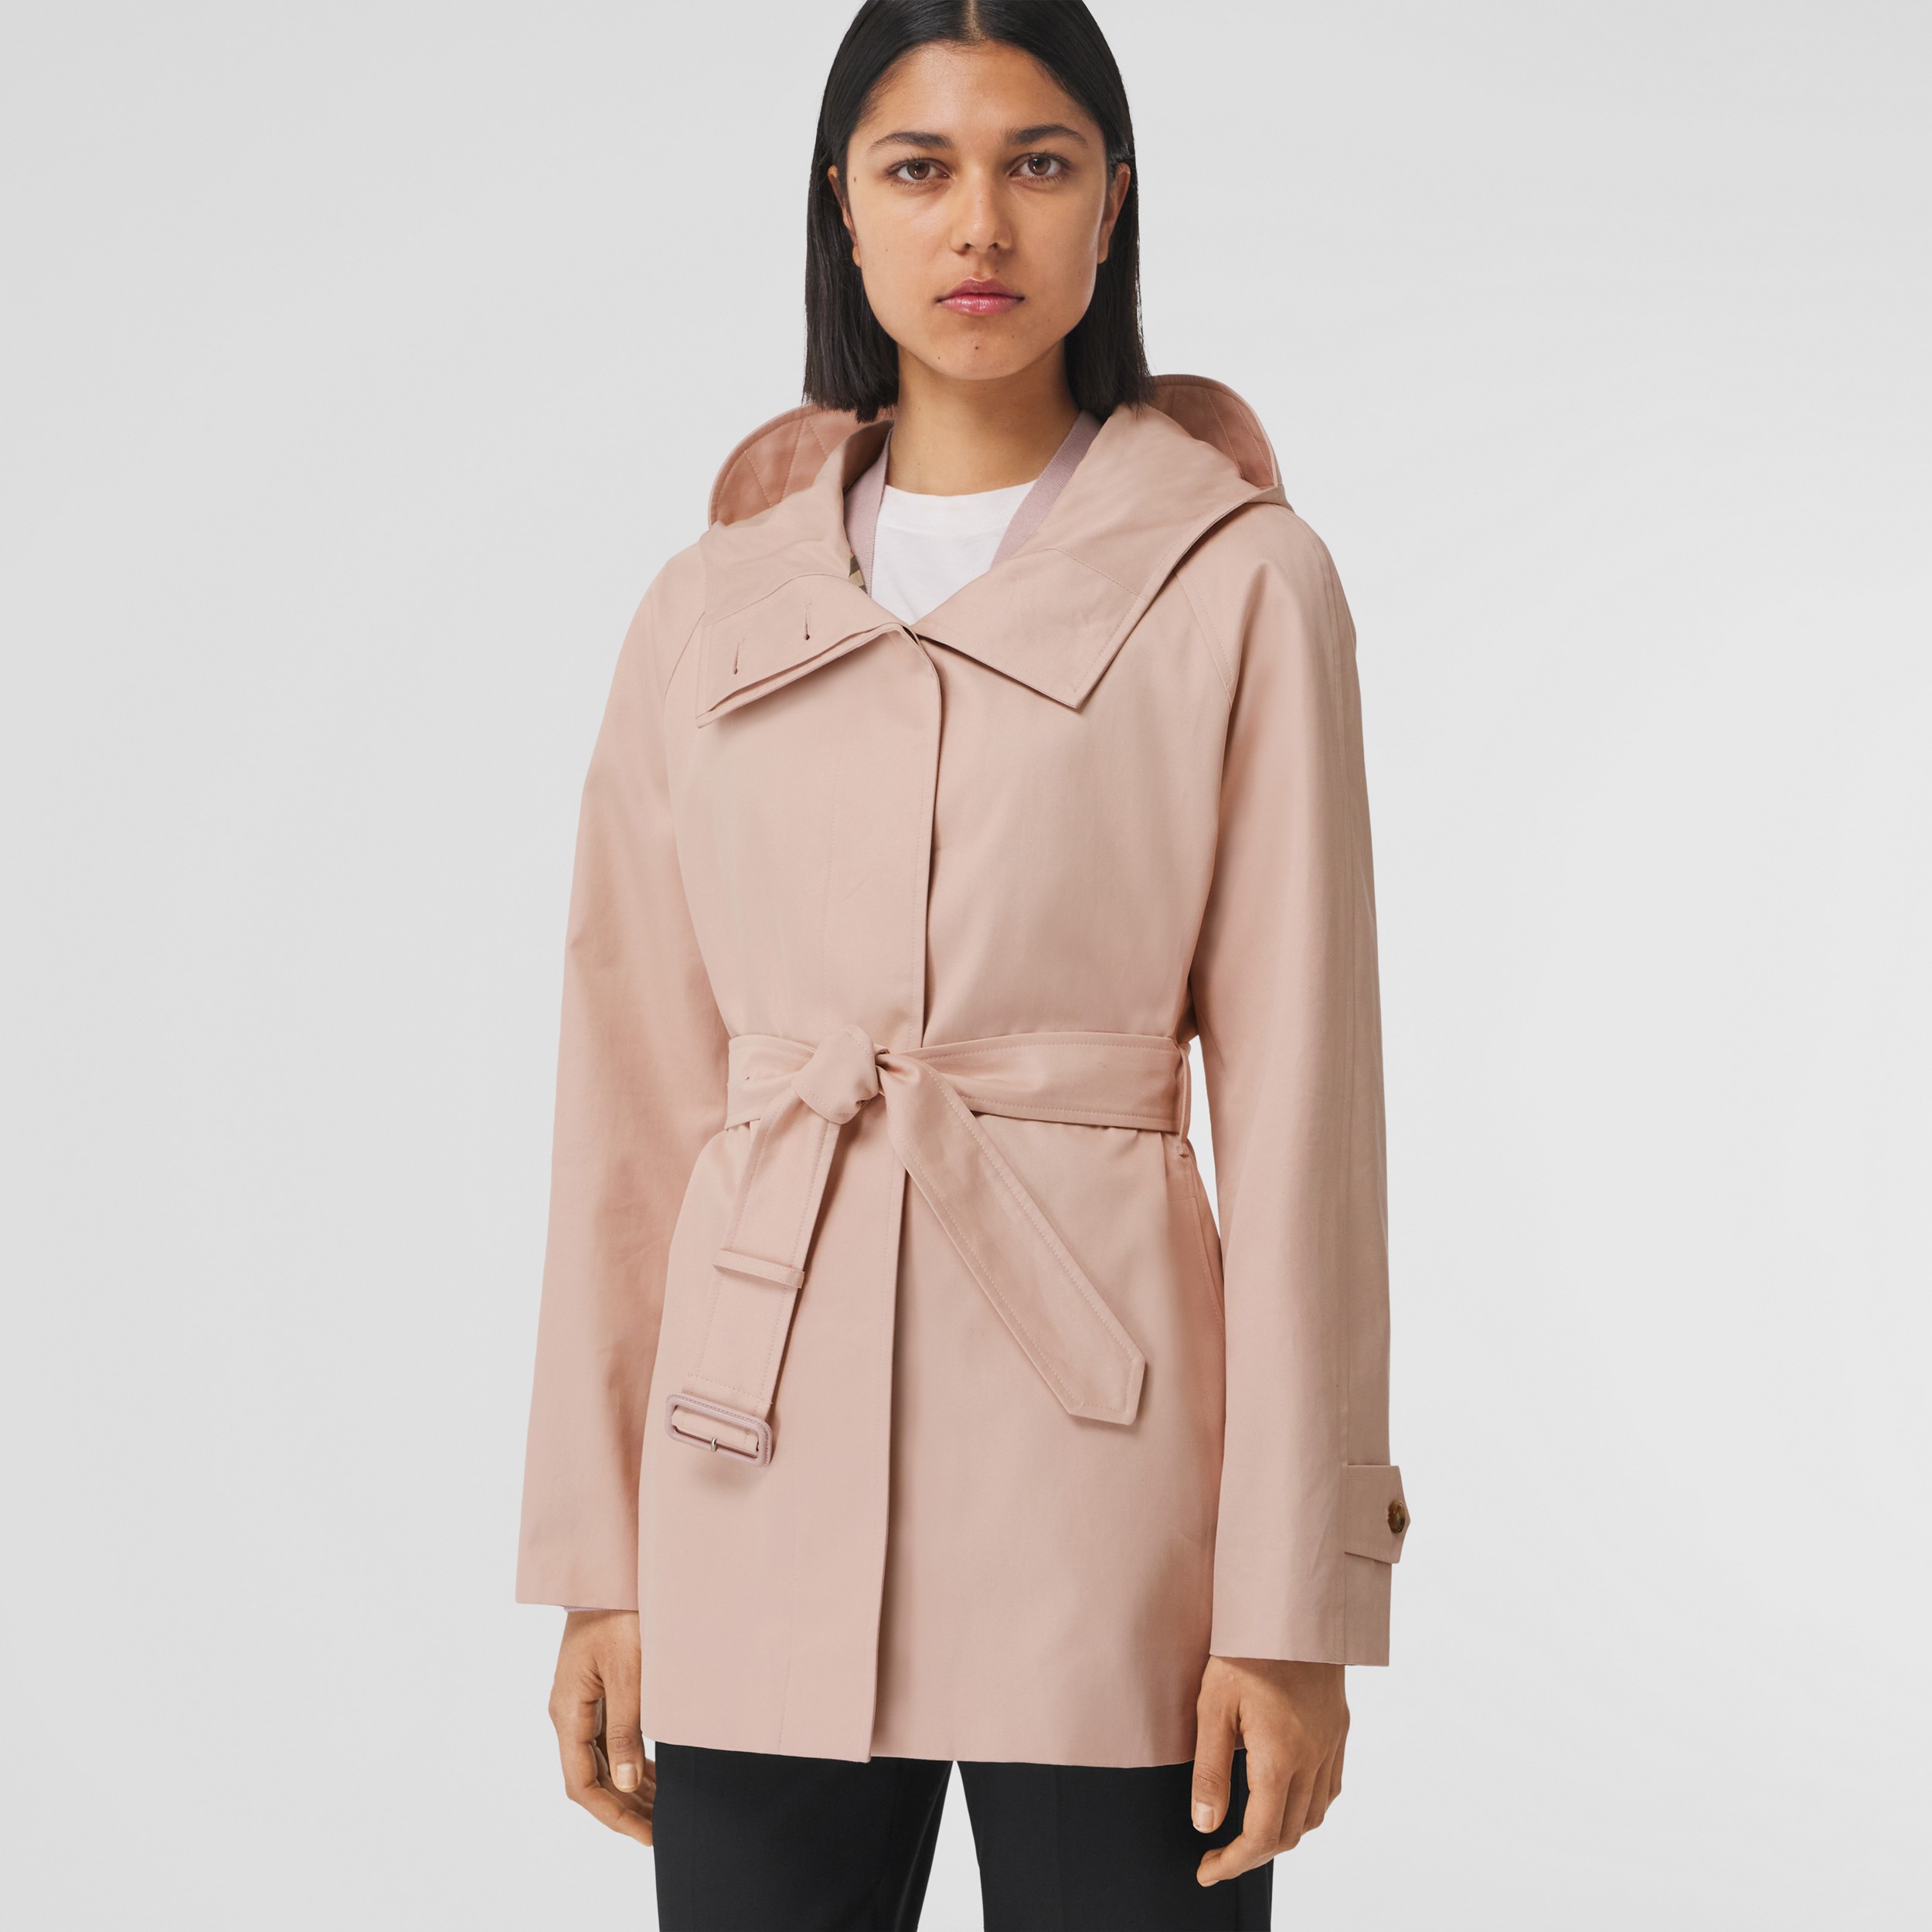 Stylish Vogue Womens Jacket Hooded Parka Coats Tops Ladies Coat  Cotton Outwear